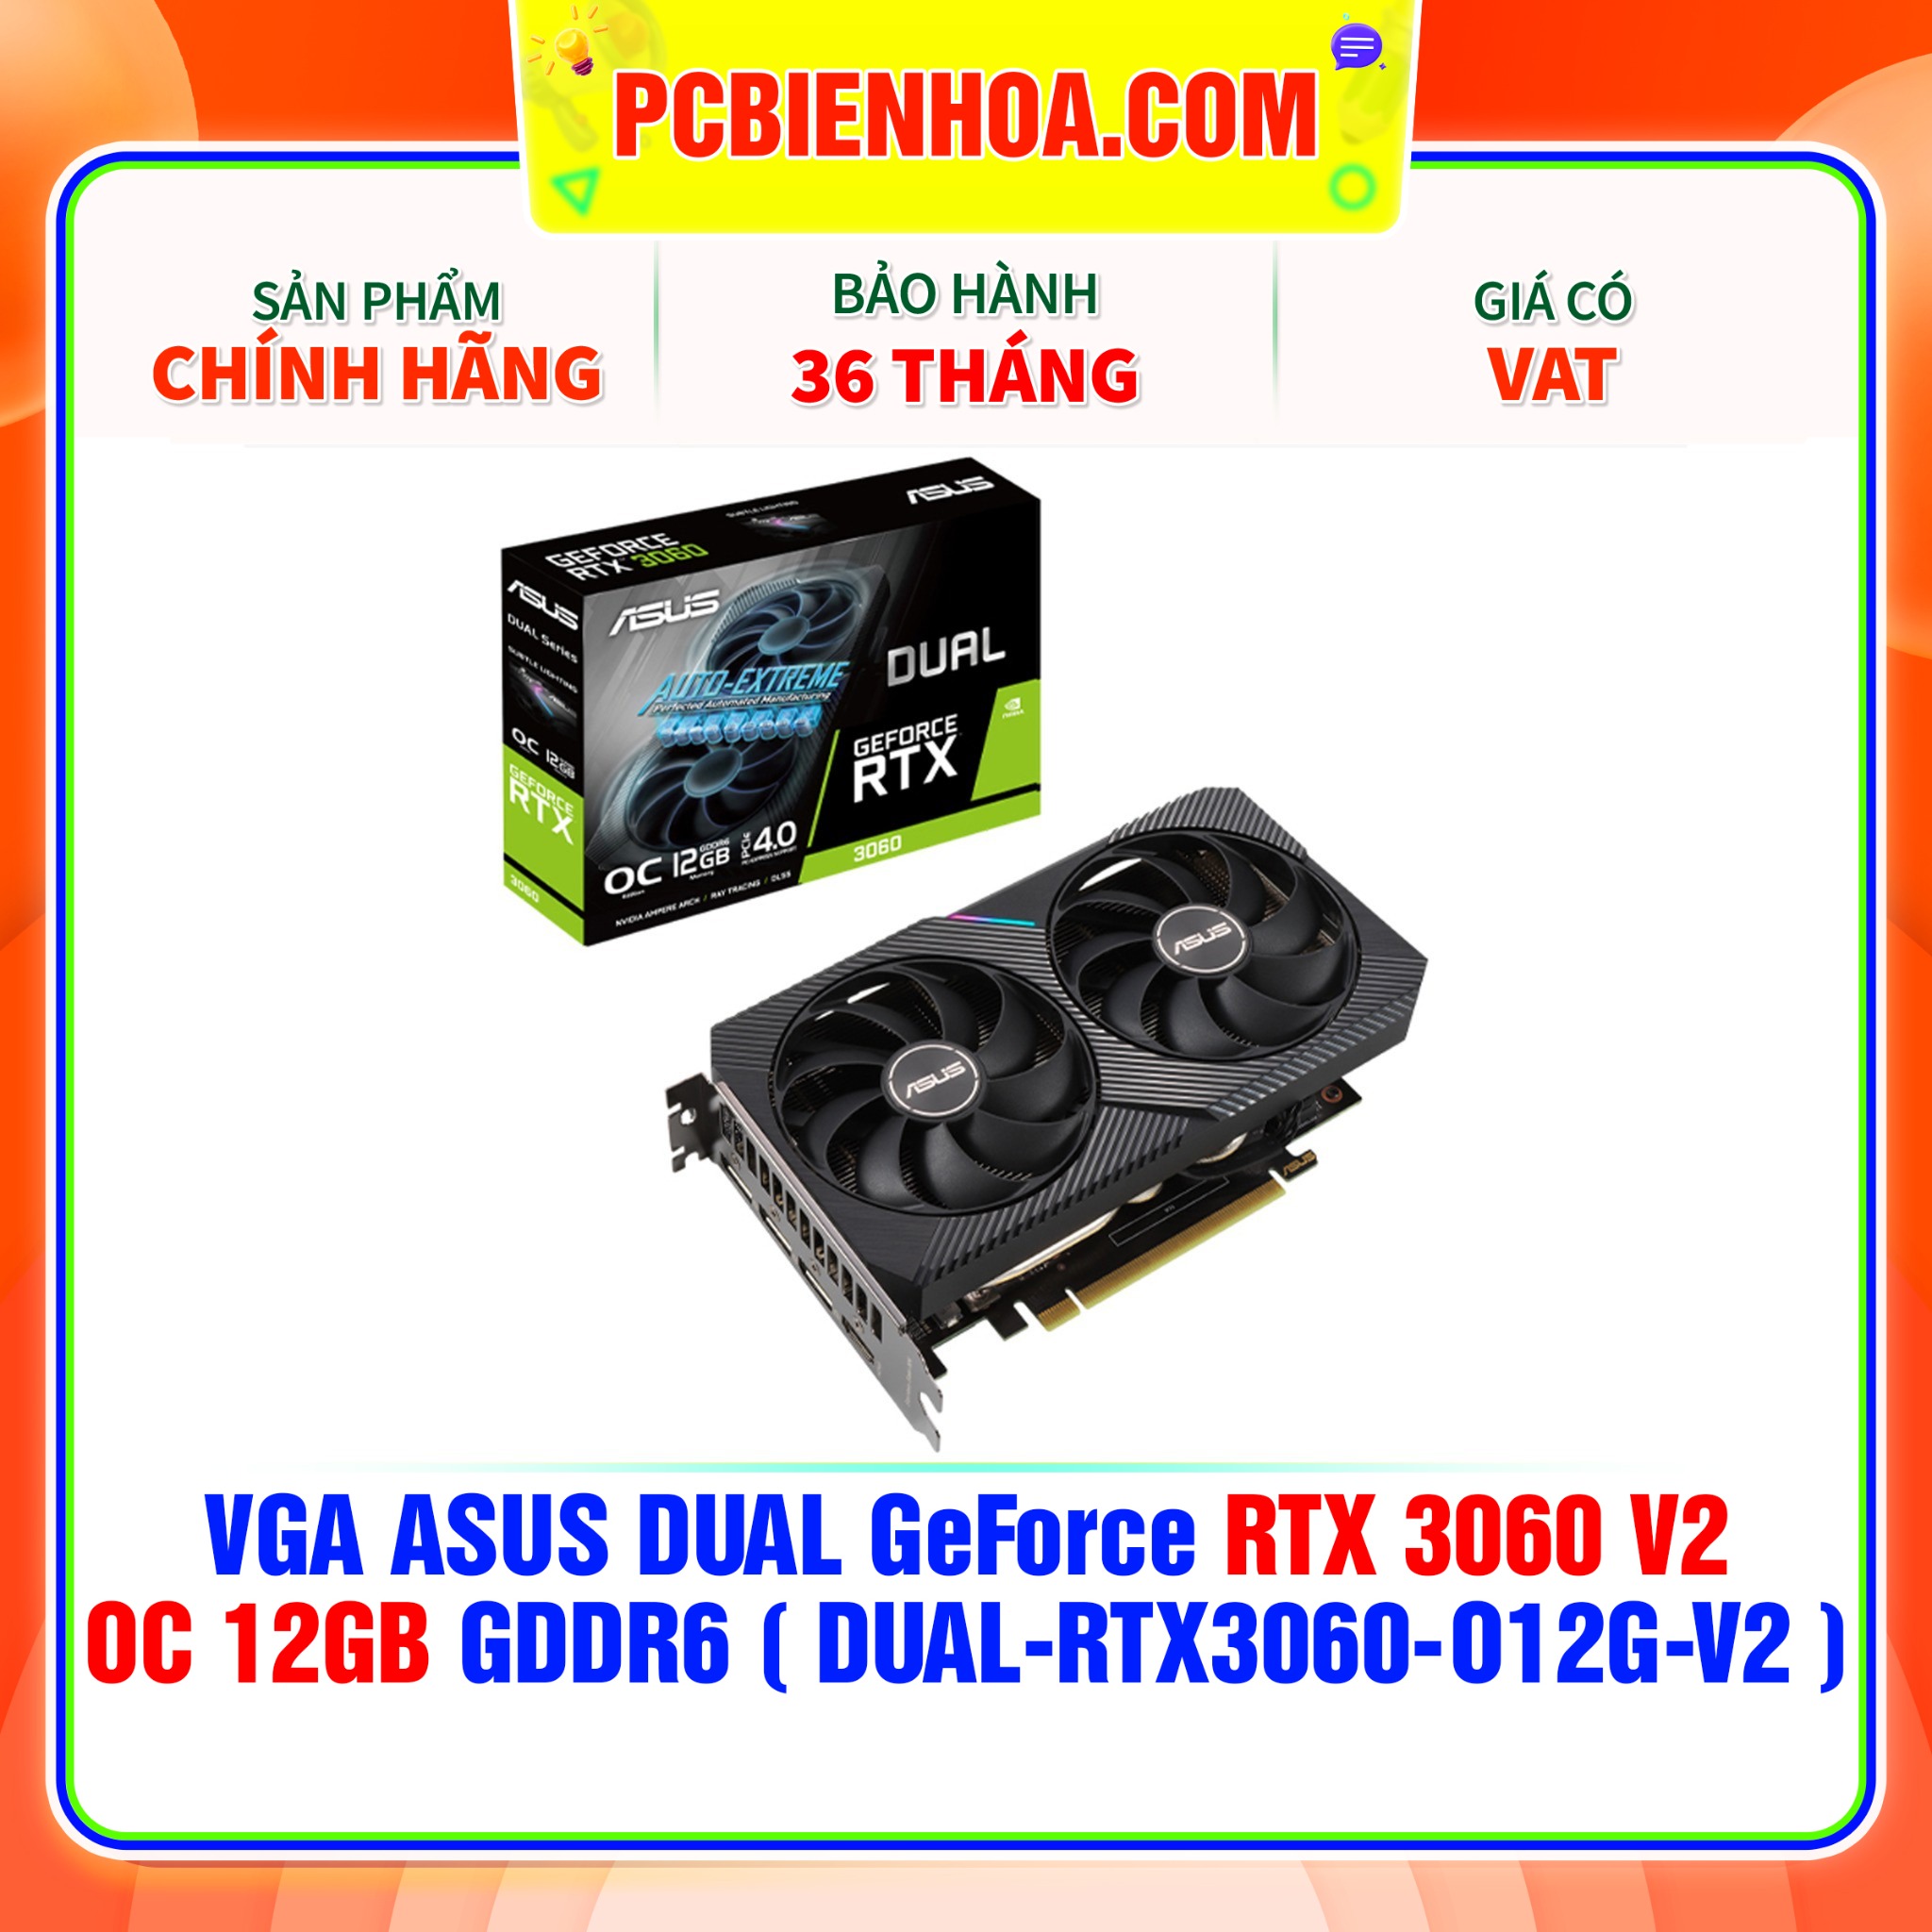 VGA ASUS DUAL GeForce RTX 3060 V2 OC 12GB GDDR6  DUAL-RTX3060-O12G-V2